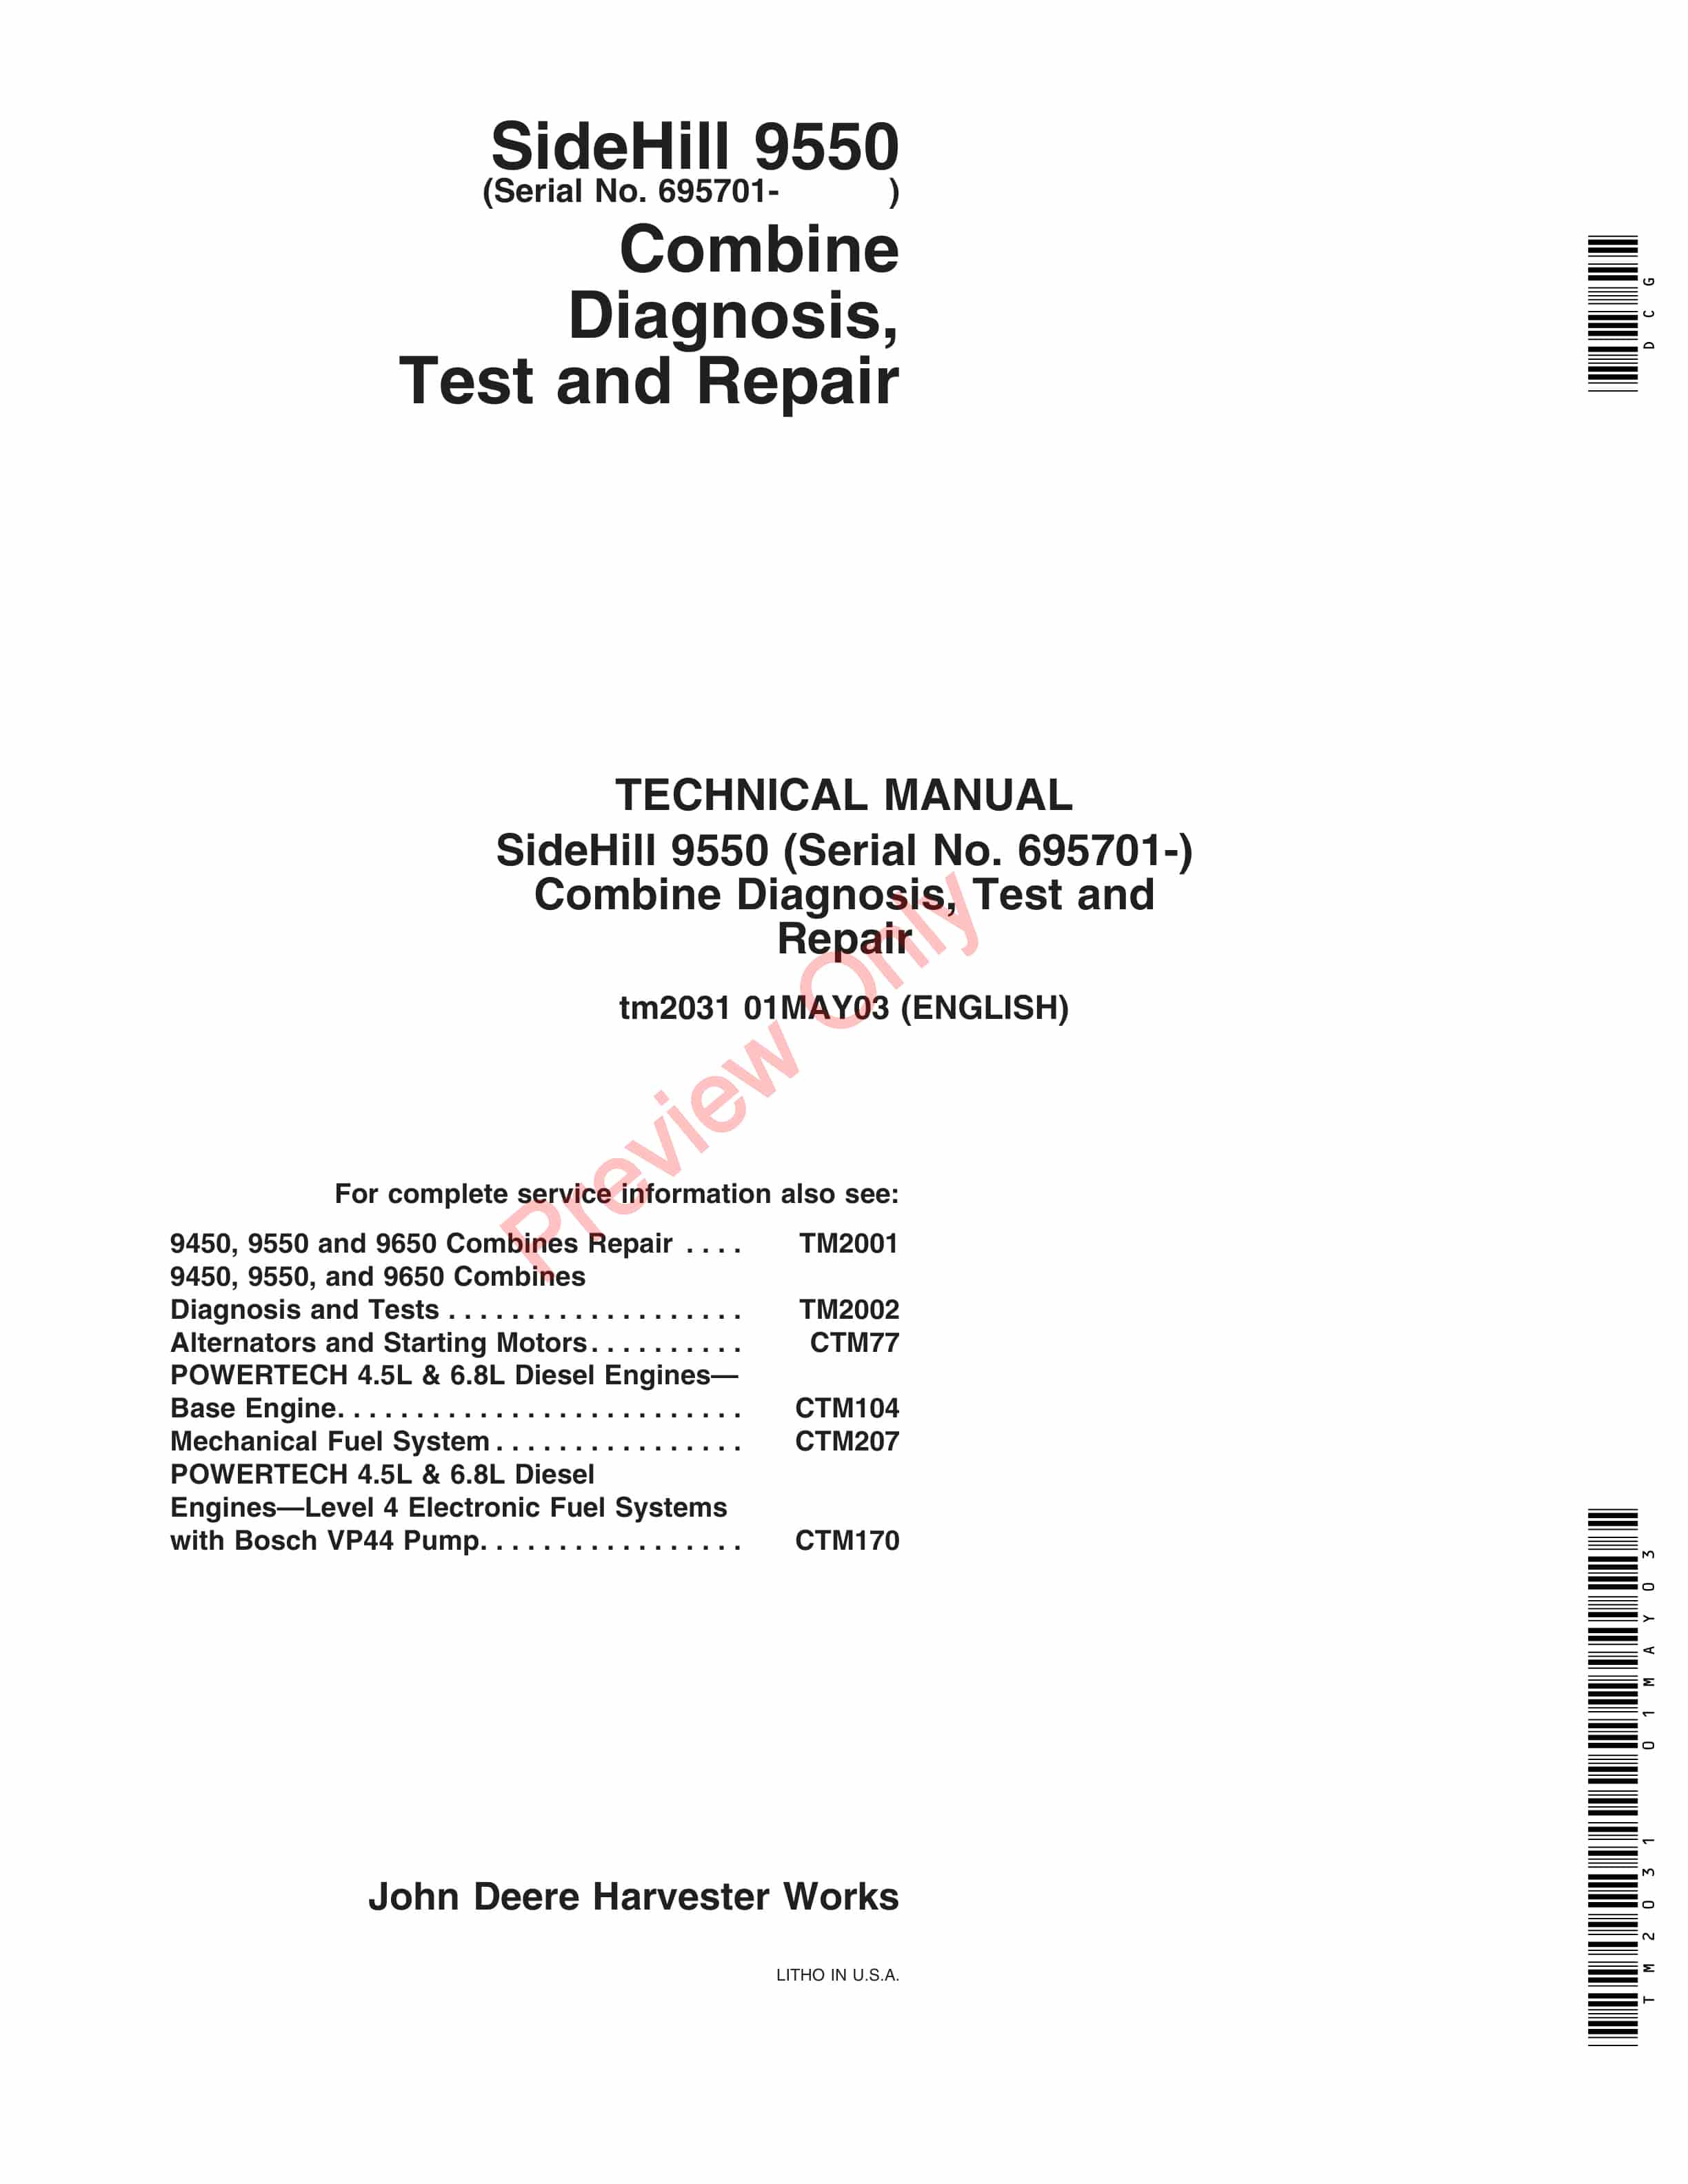 John Deere 9550 Sidehill Combine s.n. 695701 Technical Manual TM2031 01MAY03 1